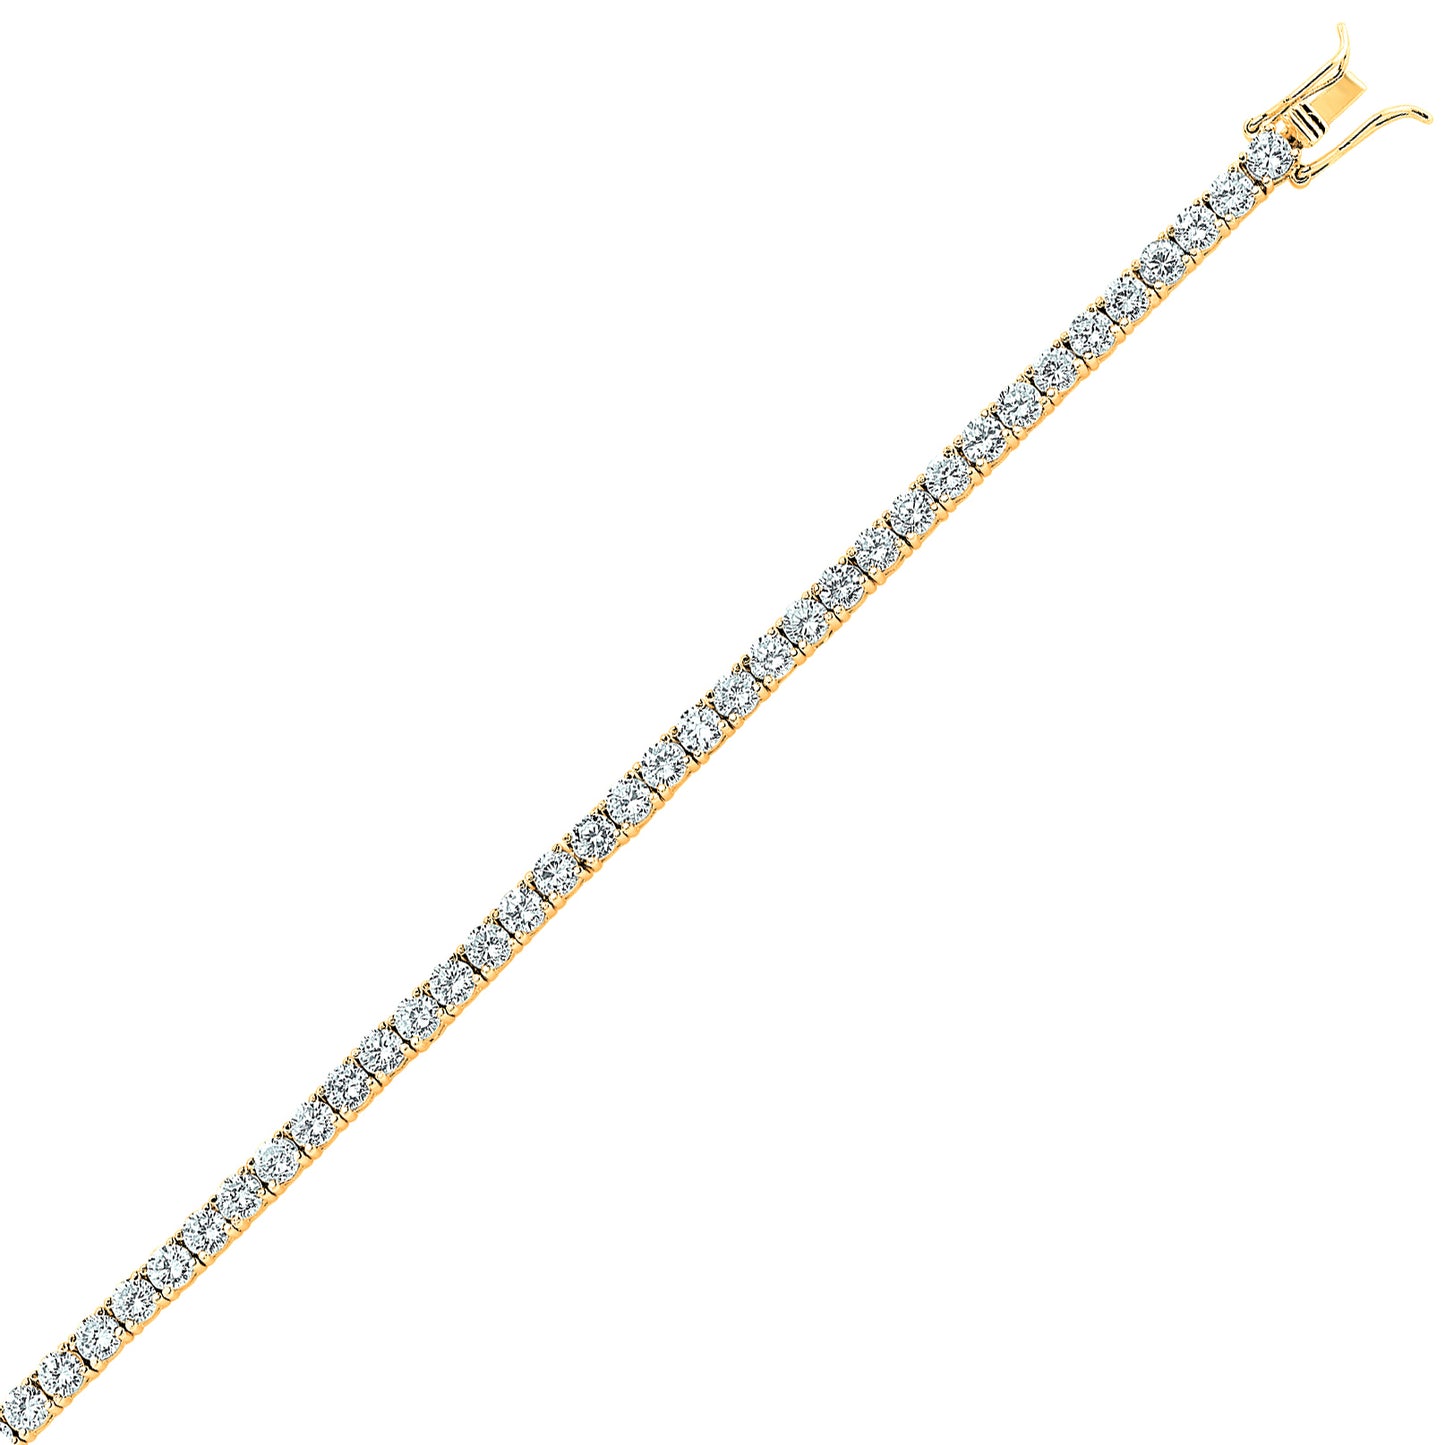 Gilded Silver  CZ 4 Claw Line Tennis Bracelet 5mm 7.5 inch - GVB096G